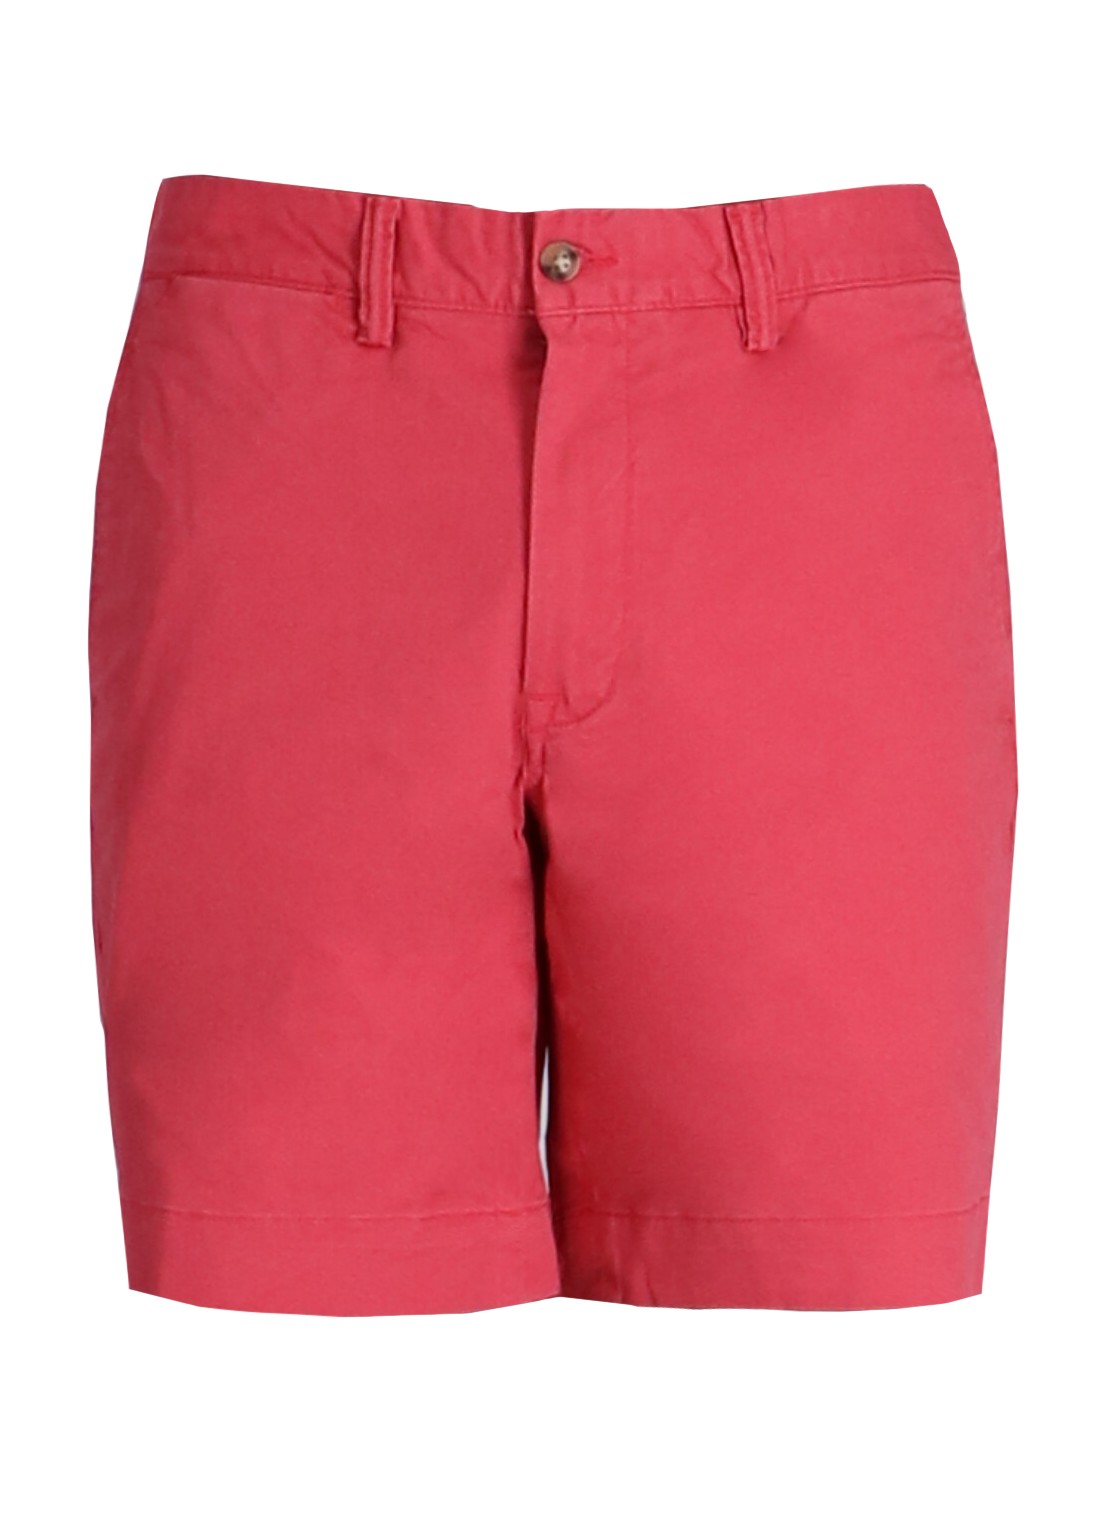 Pantalon corto polo ralph lauren short pant manstfbedford9s-flat-short - 710799213014 nantucket red 